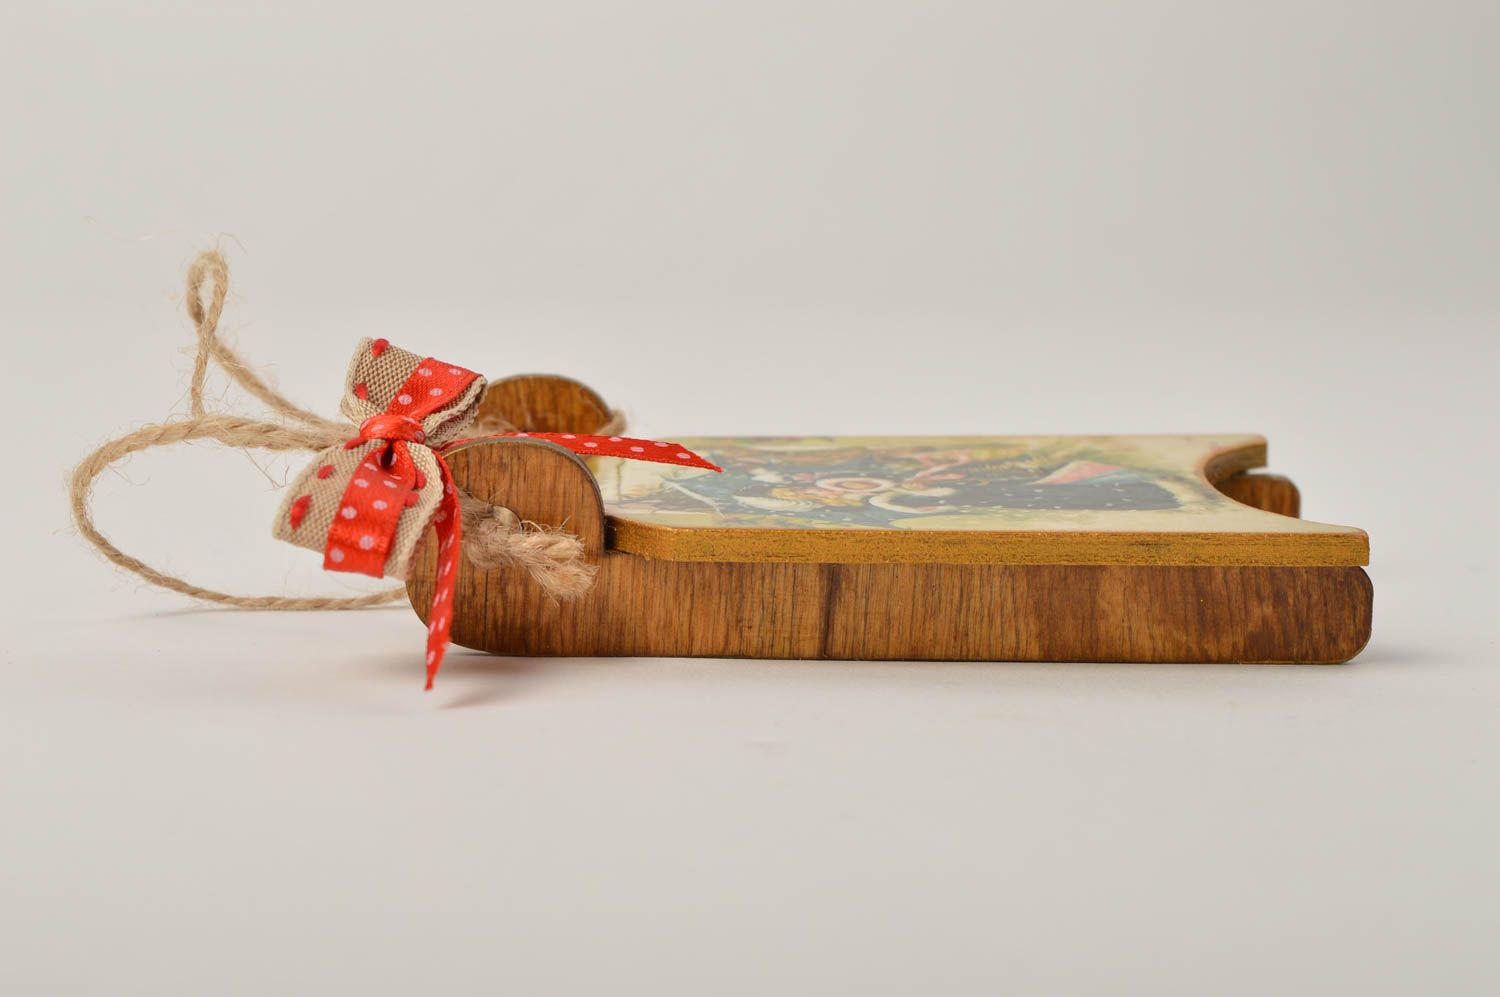 Adorno navideño casero hecho a mano elemento decorativo souvenir original foto 4